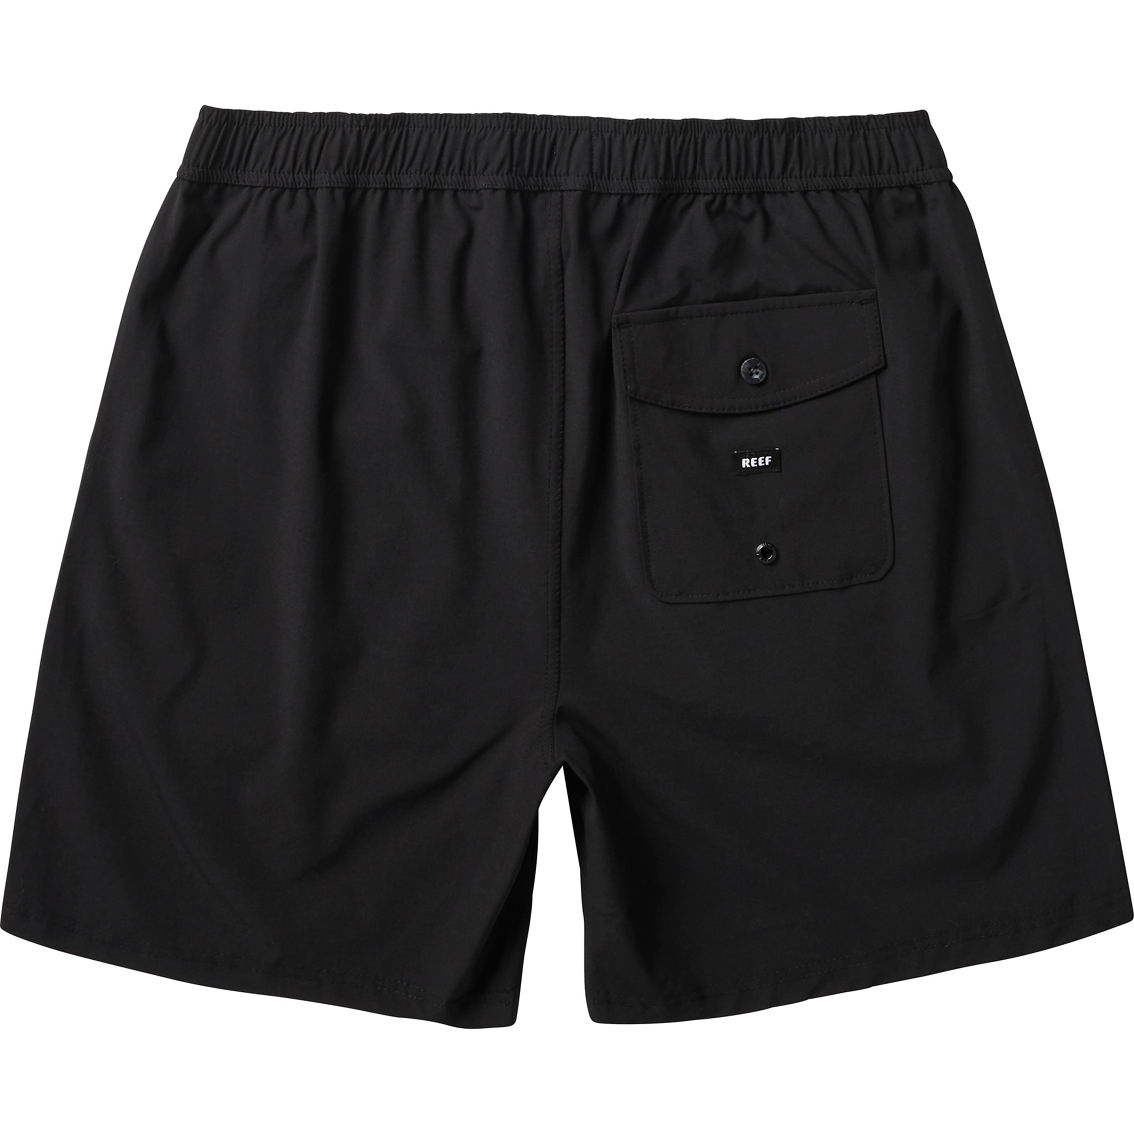 REEF Fields Elastic Waist Shorts - Image 4 of 4